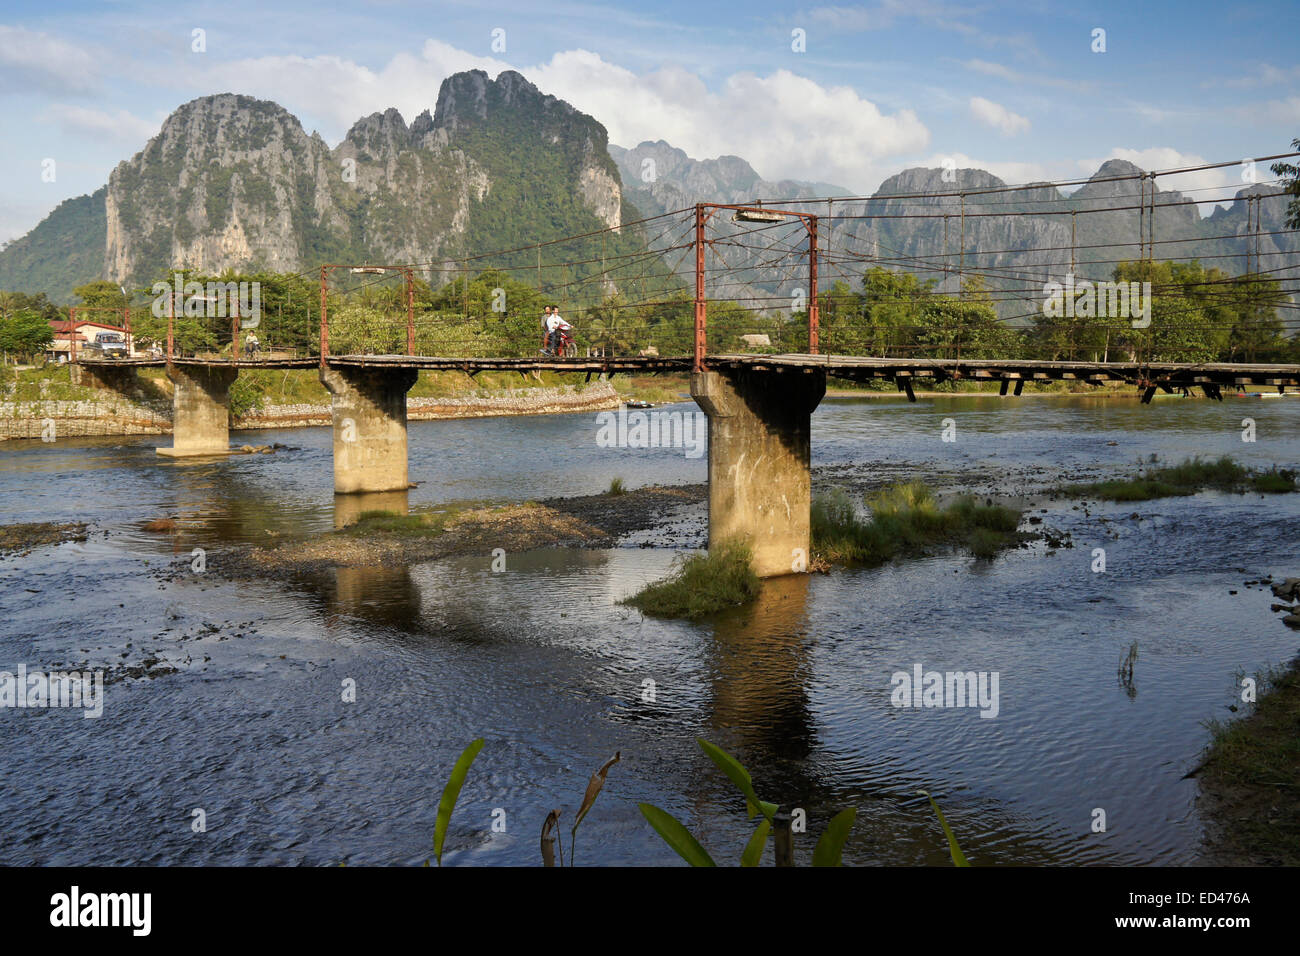 Karst mountains and bridge across Song River, Vang Vieng, Laos Stock Photo